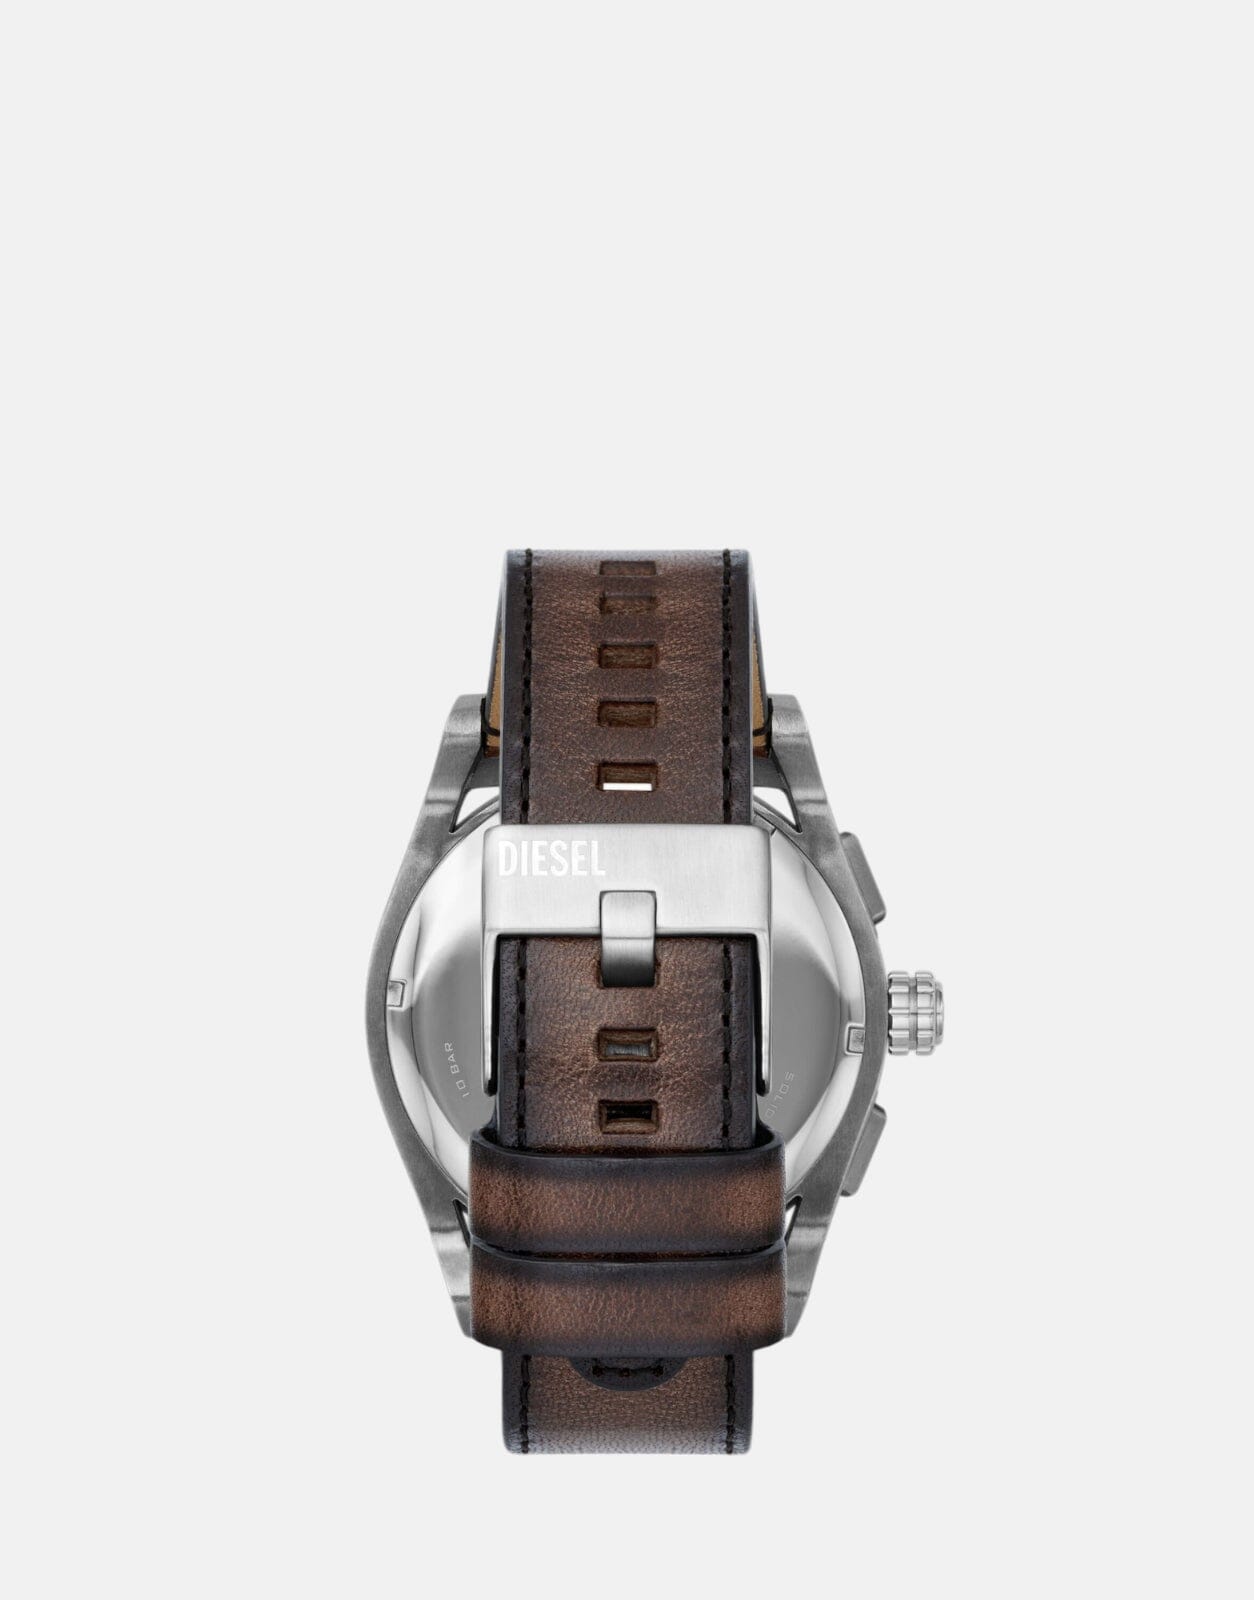 Diesel Timeframe Advanced Watch - Subwear